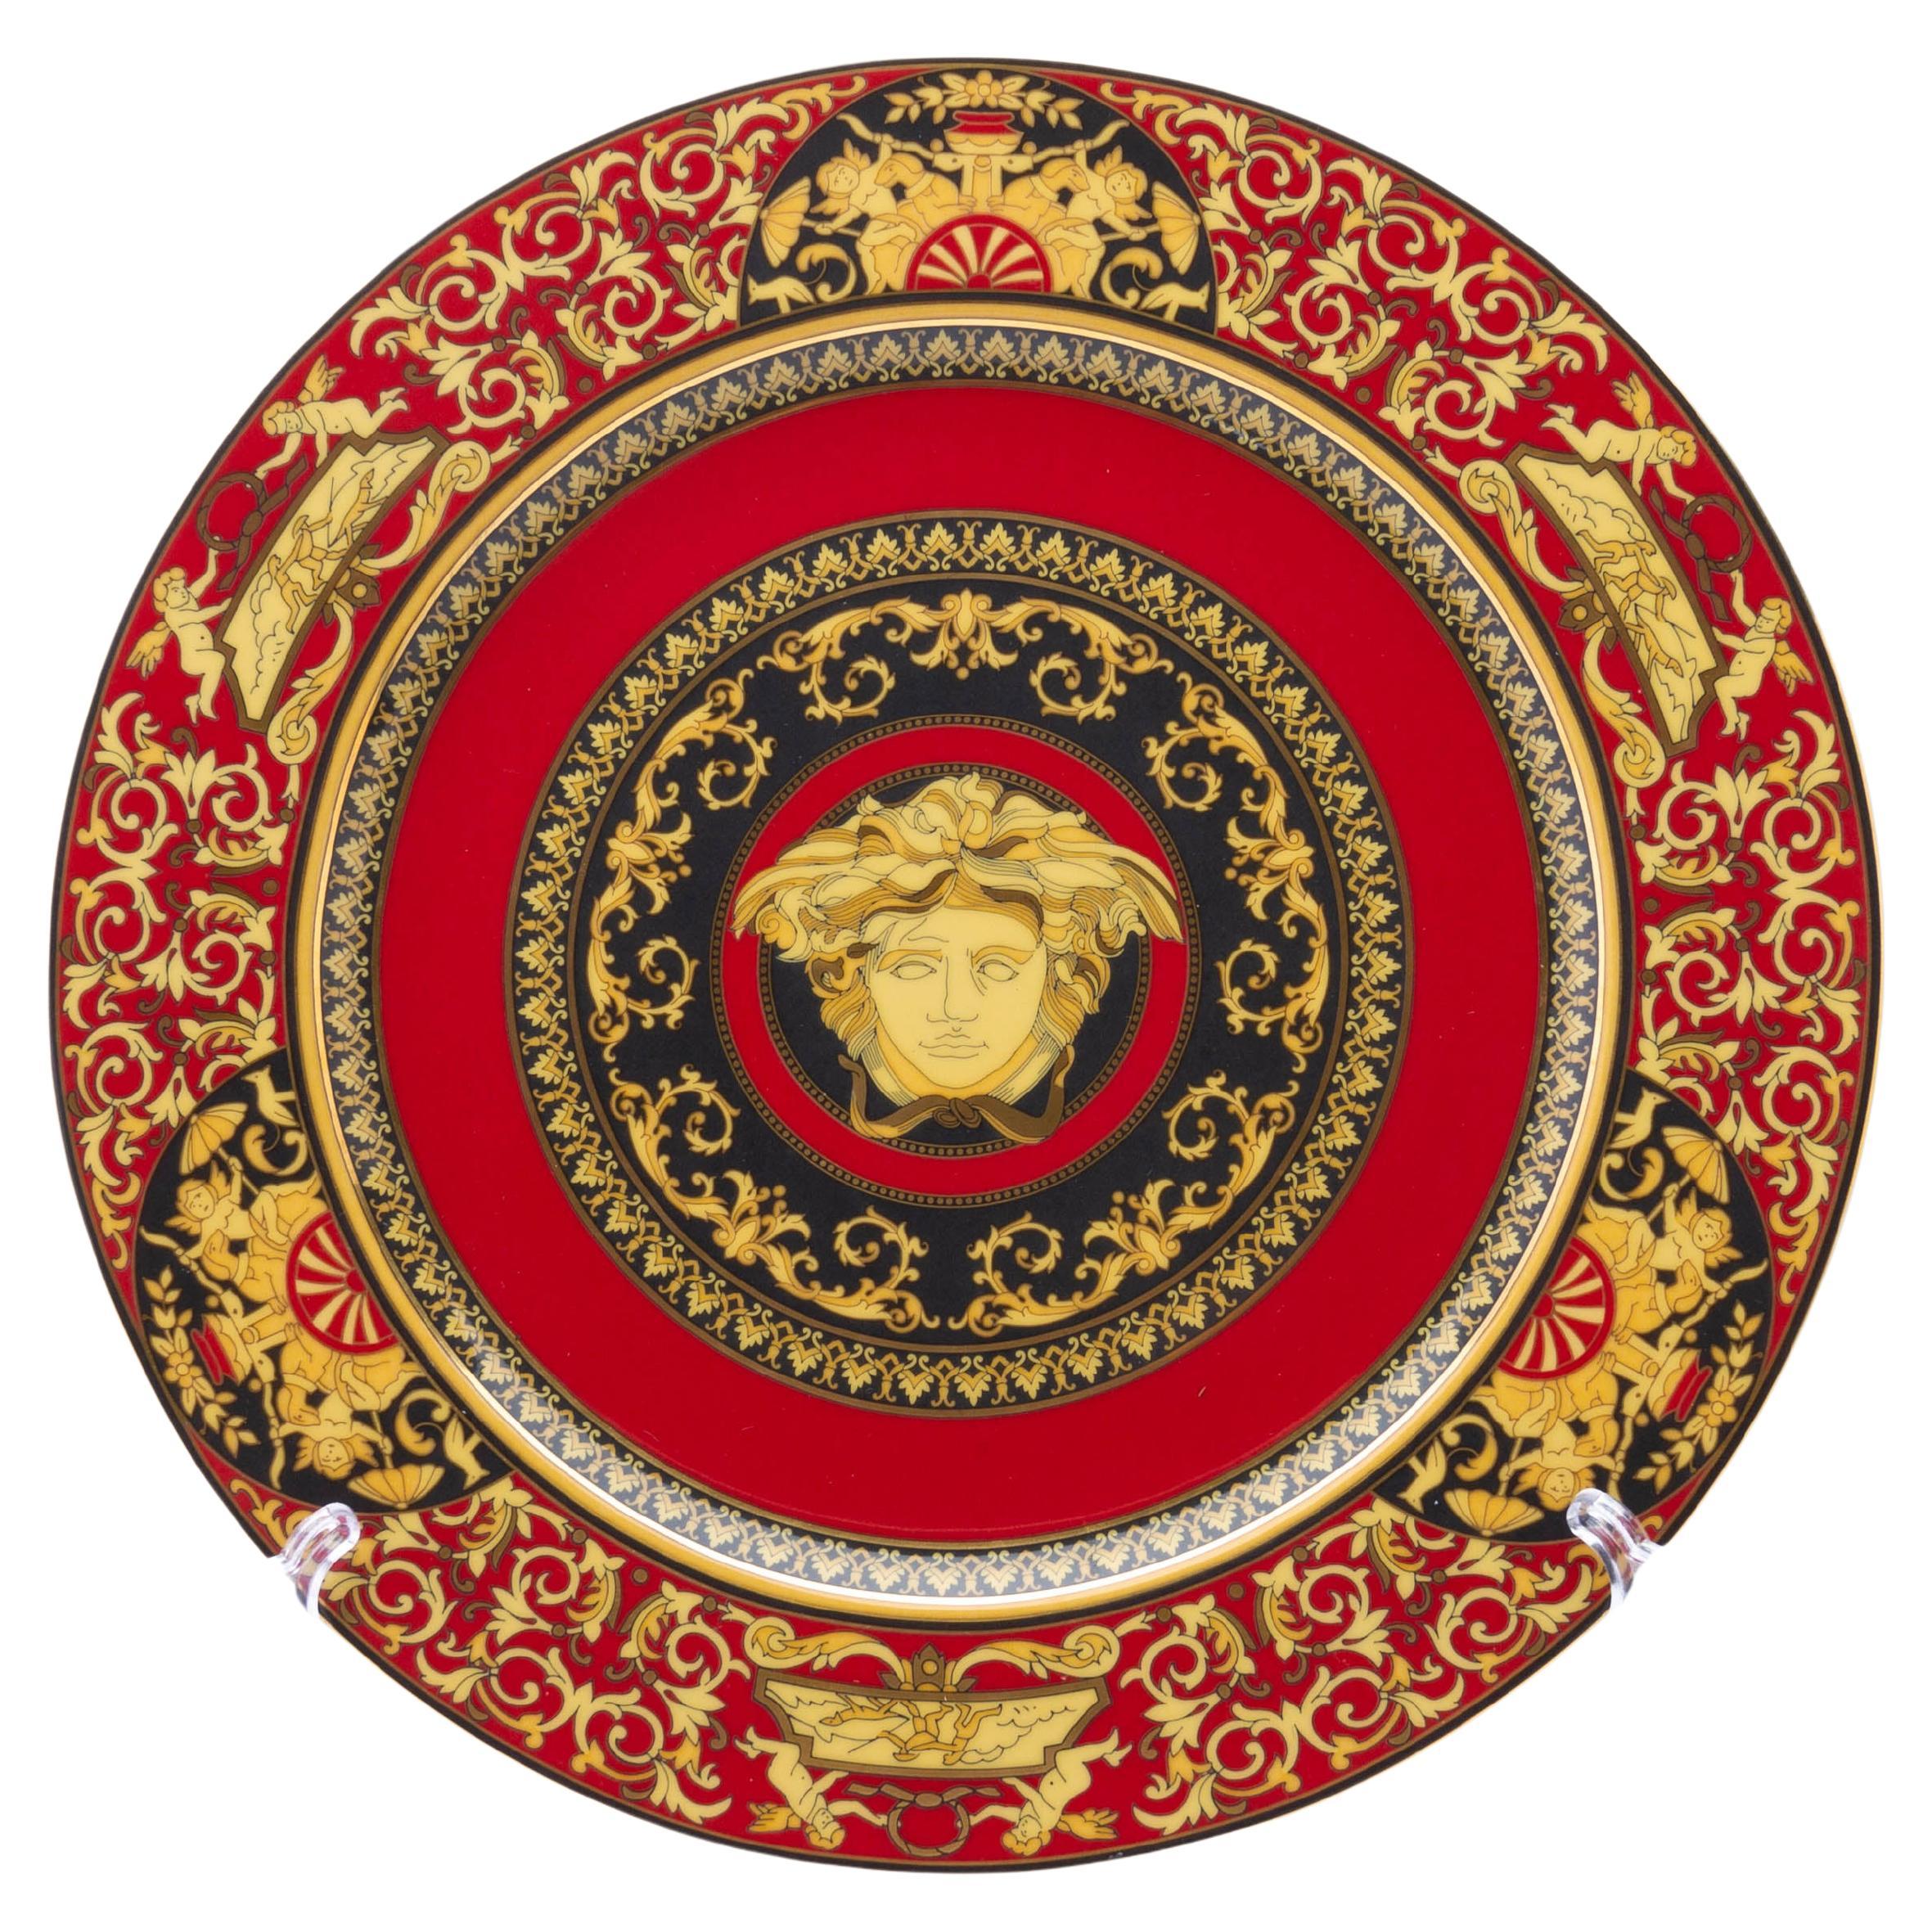 Versace Medusa Rosenthal Fine Porcelain Plate